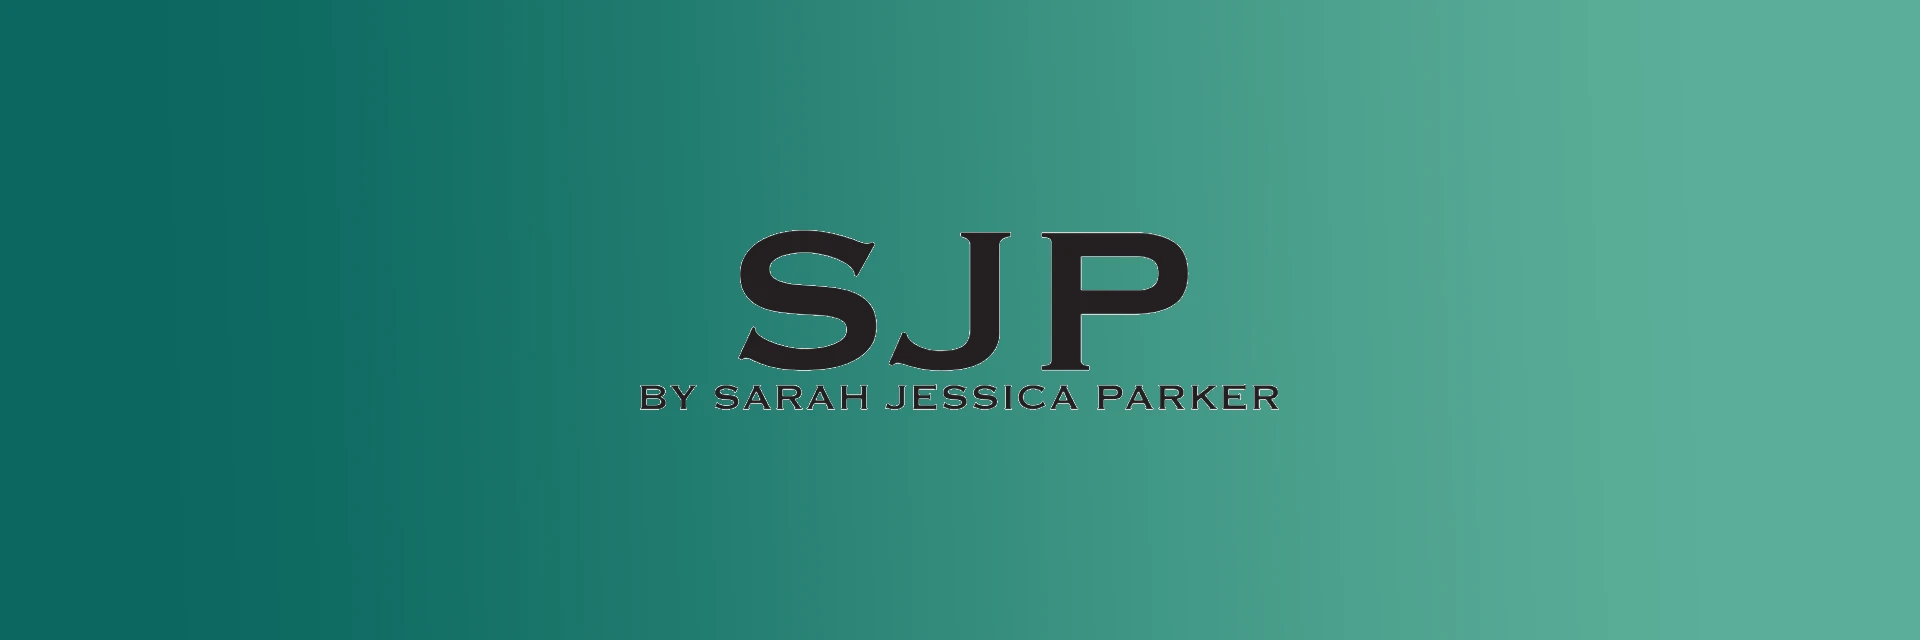 Image of Sarah Jessica Parker perfume brand logo